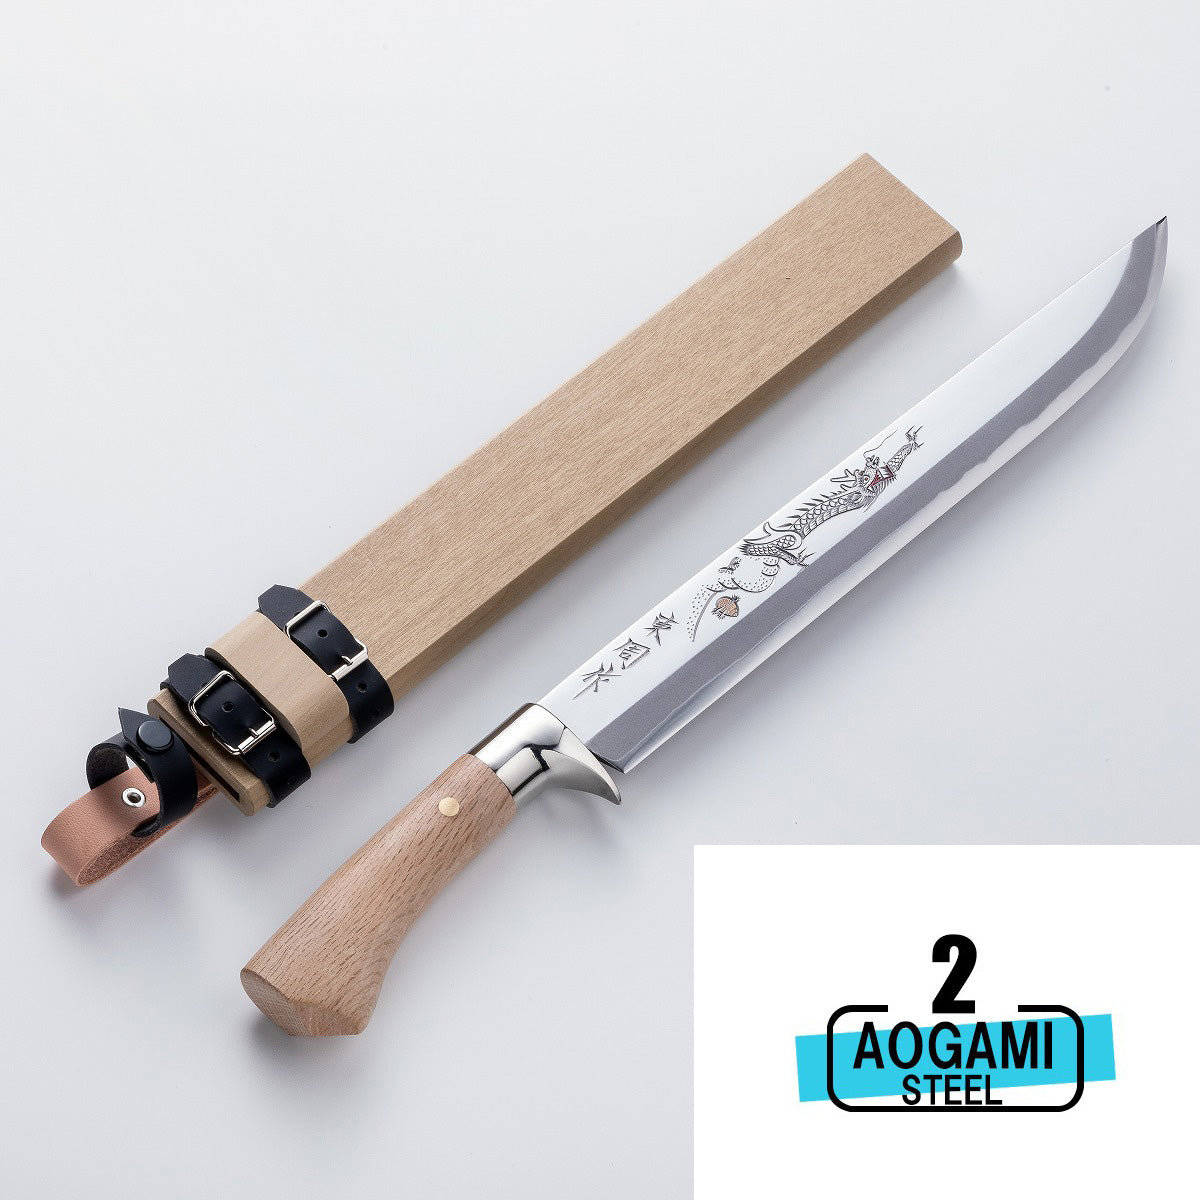 HONMAMON "AZUMASYUSAKU" Hunting Knife Carving of DRAGON 300mm, Japanese Outdoor Sword Type Knife